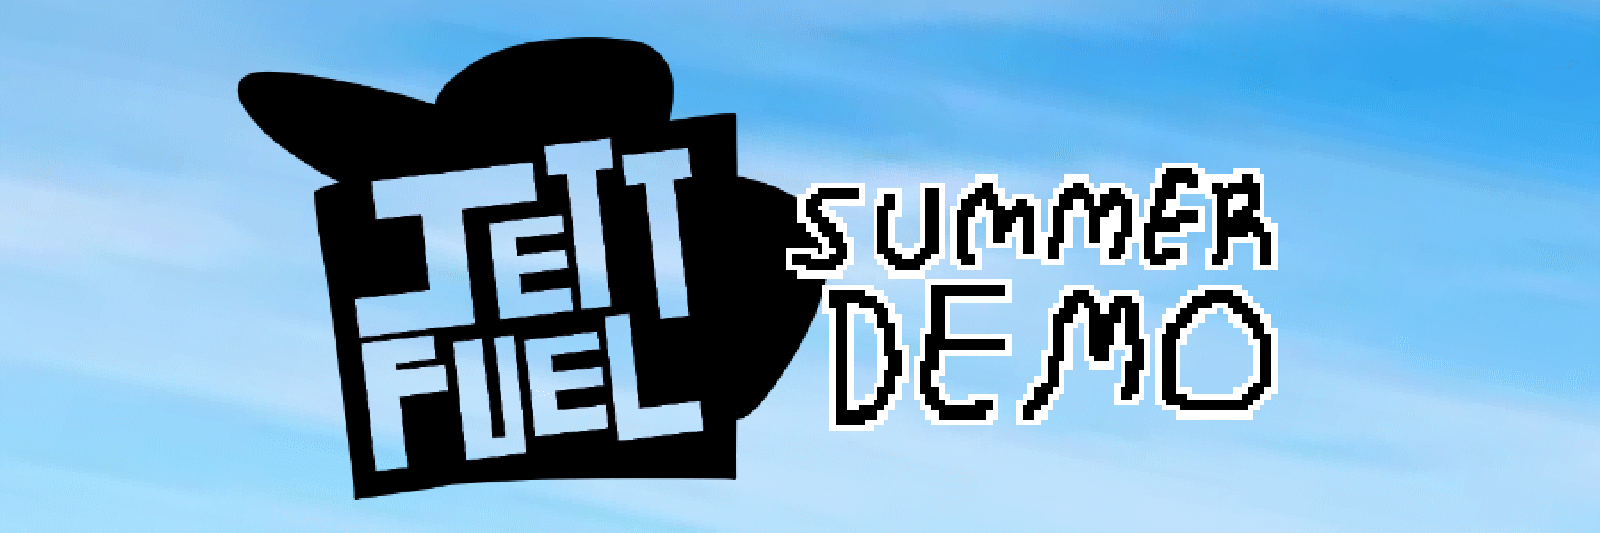 JettFuel Summer Demo!